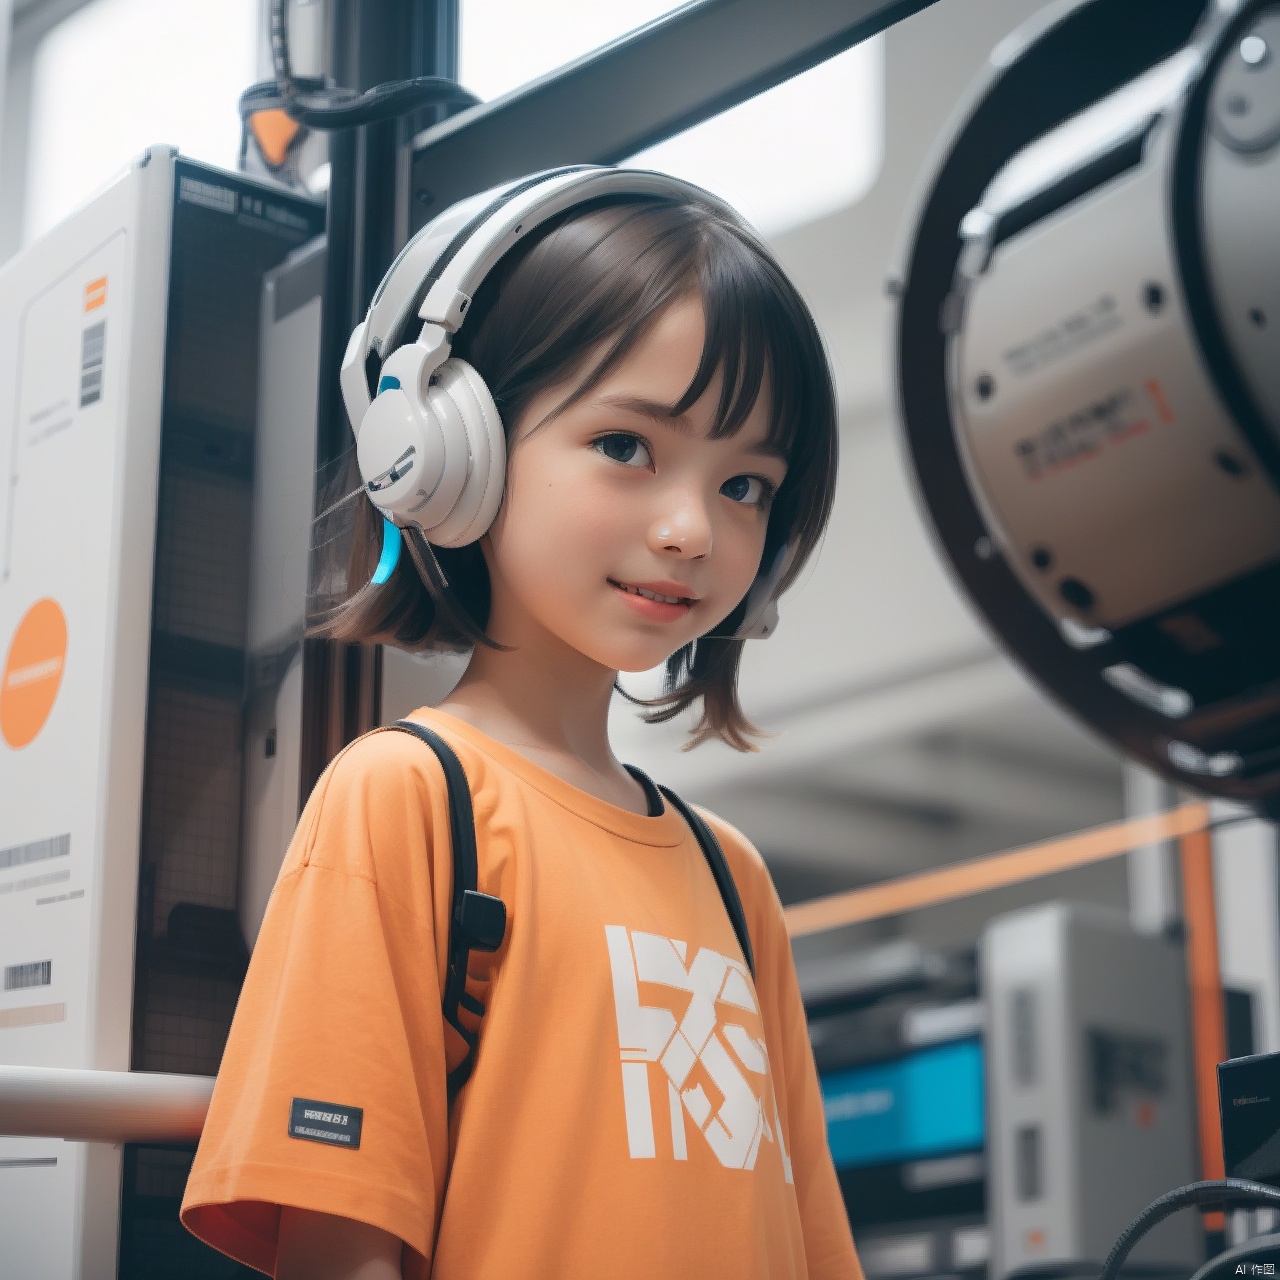  1girl,(A Robot:0.9),orange,Wearing headphones,Upper body, machinery,(smile:0.9),black_hair,